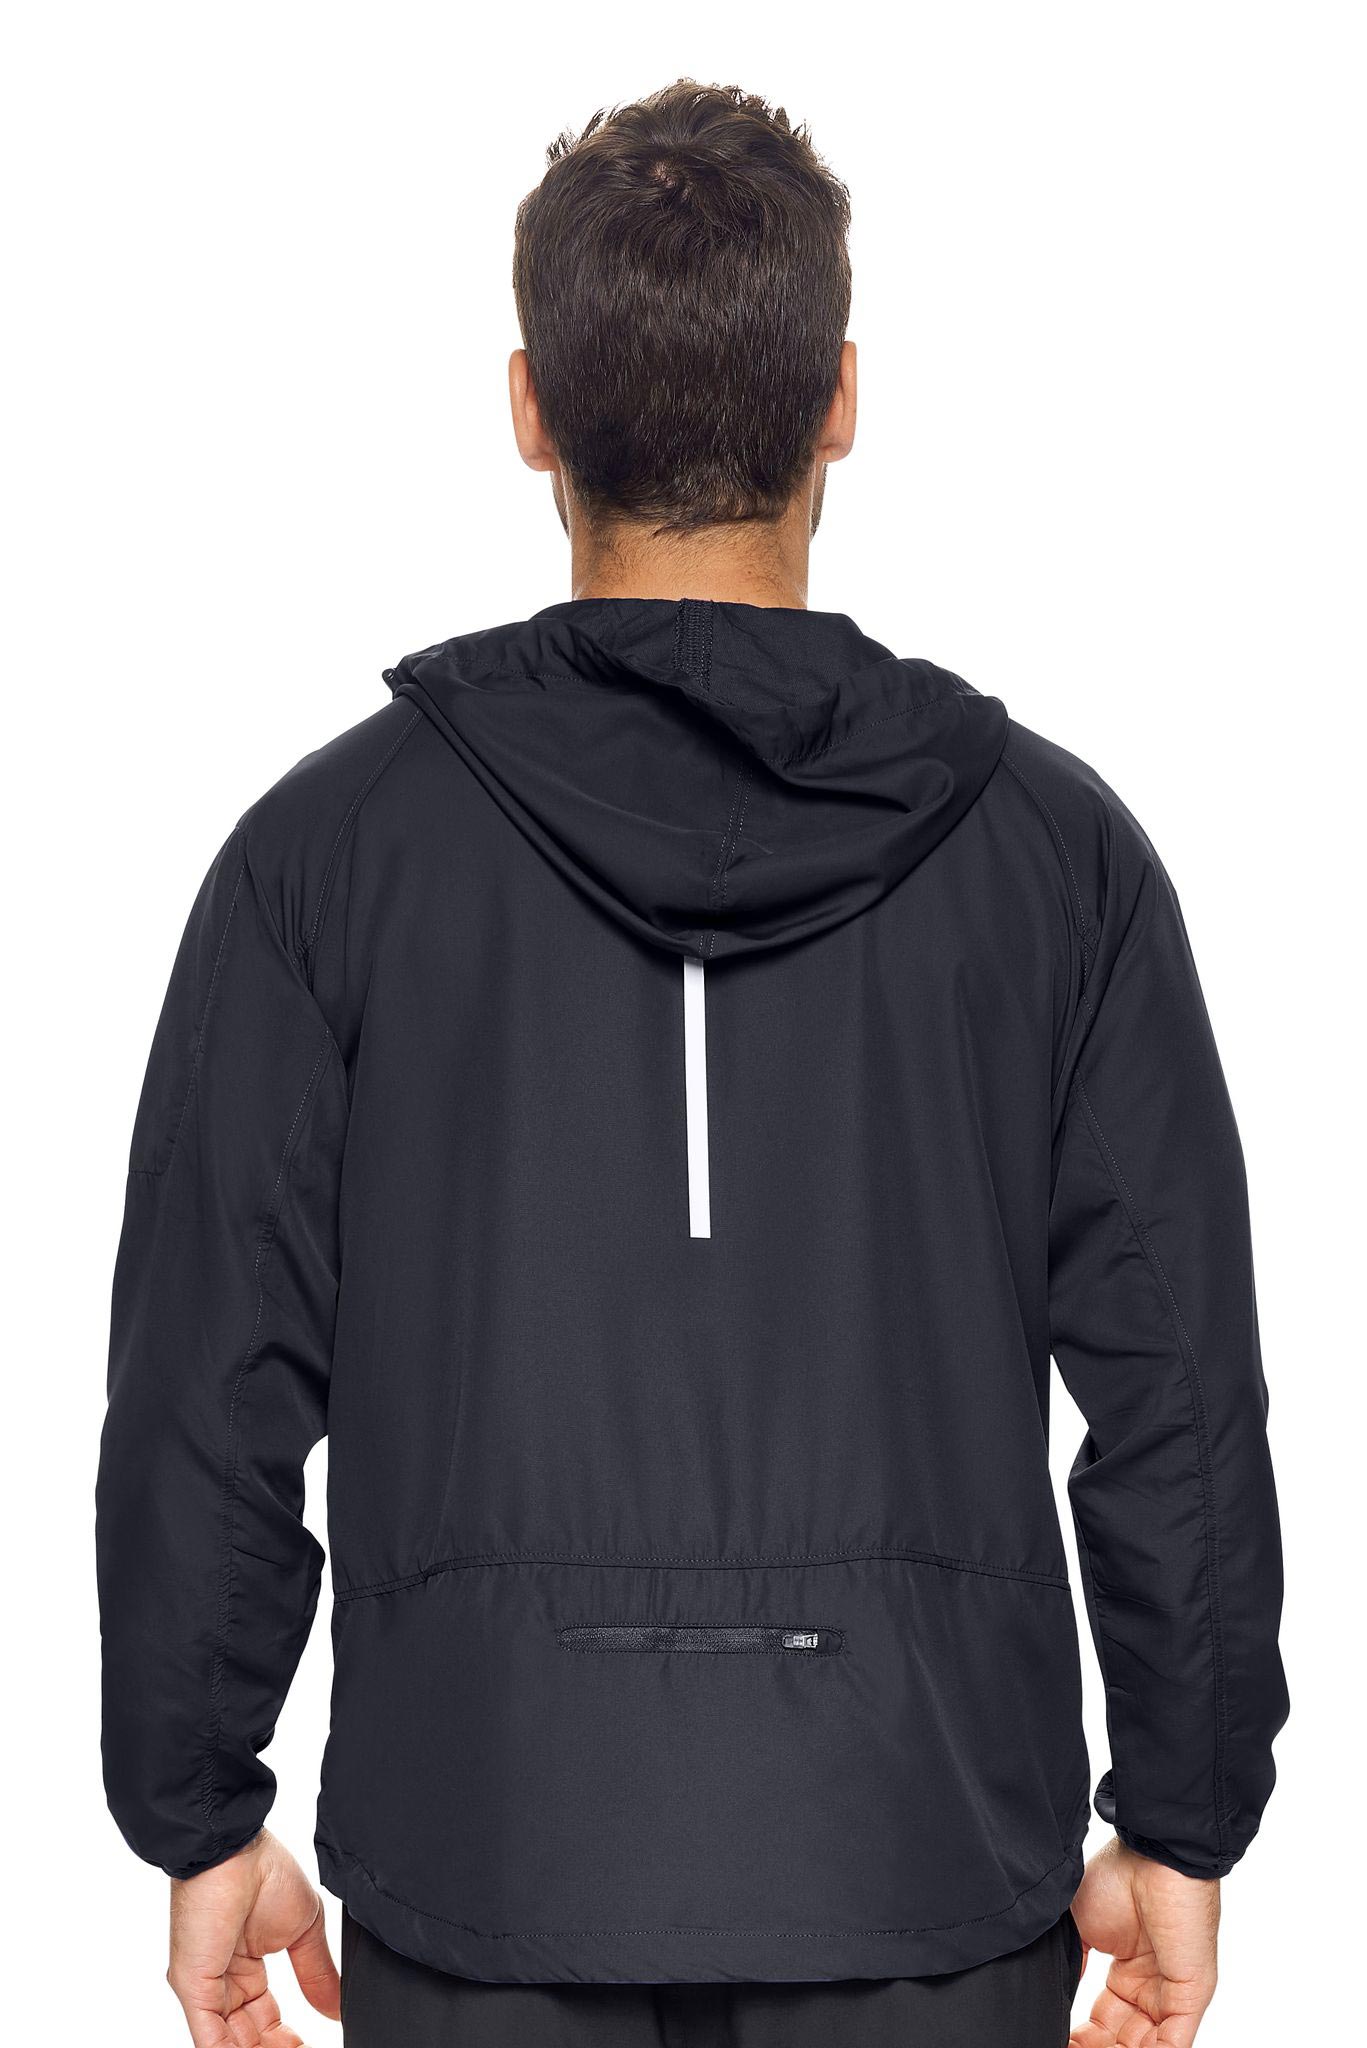 Expert Brand Retail Men's Hooded Swift Tec Water Resistant Jacket Black#color_black